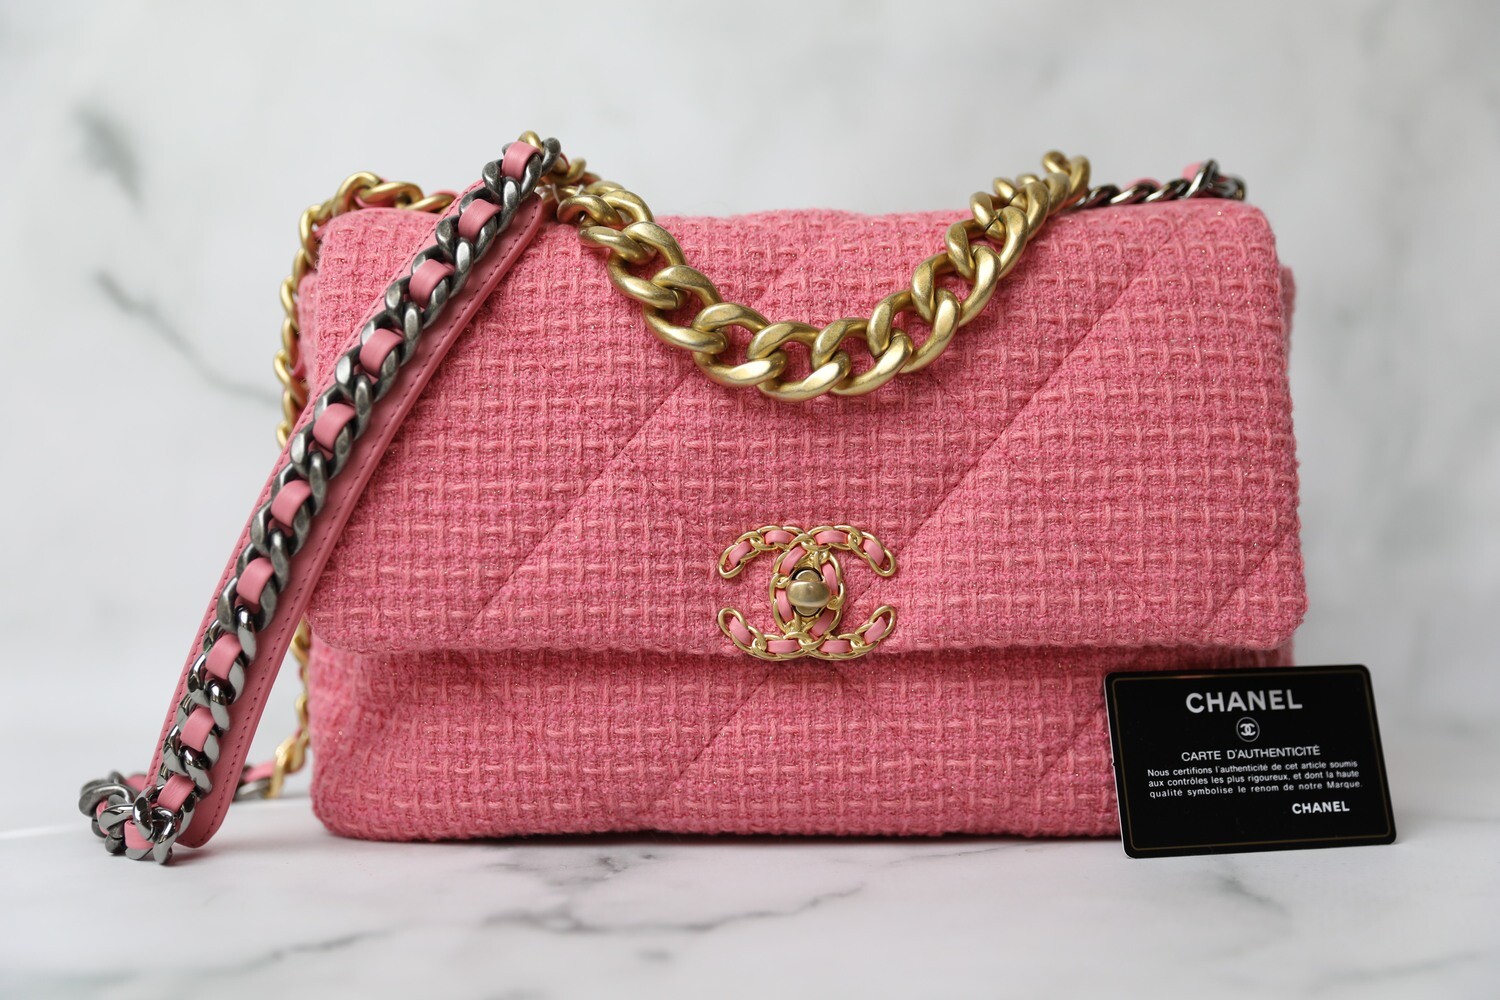 Chanel 19 Large, Pink Tweed, New in Box WA001